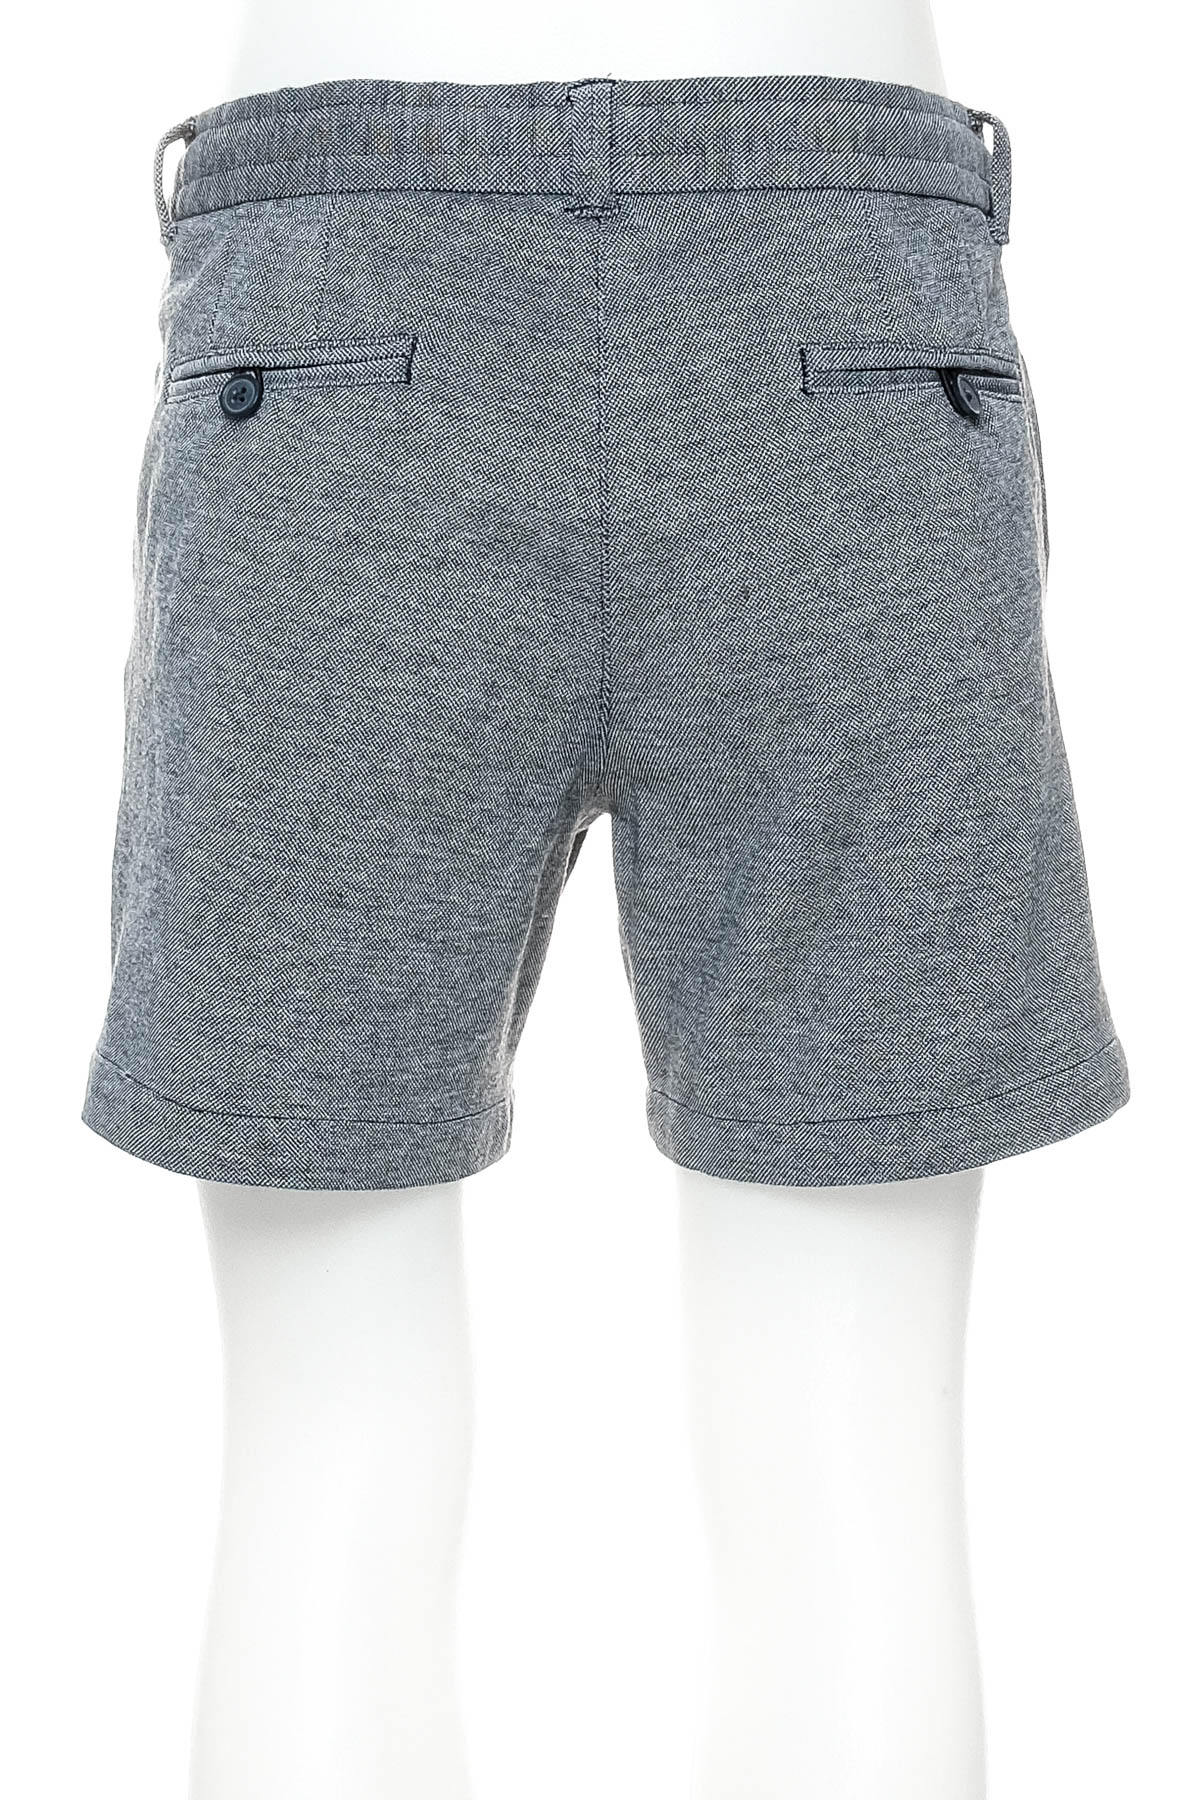 Men's shorts - Watson's - 1